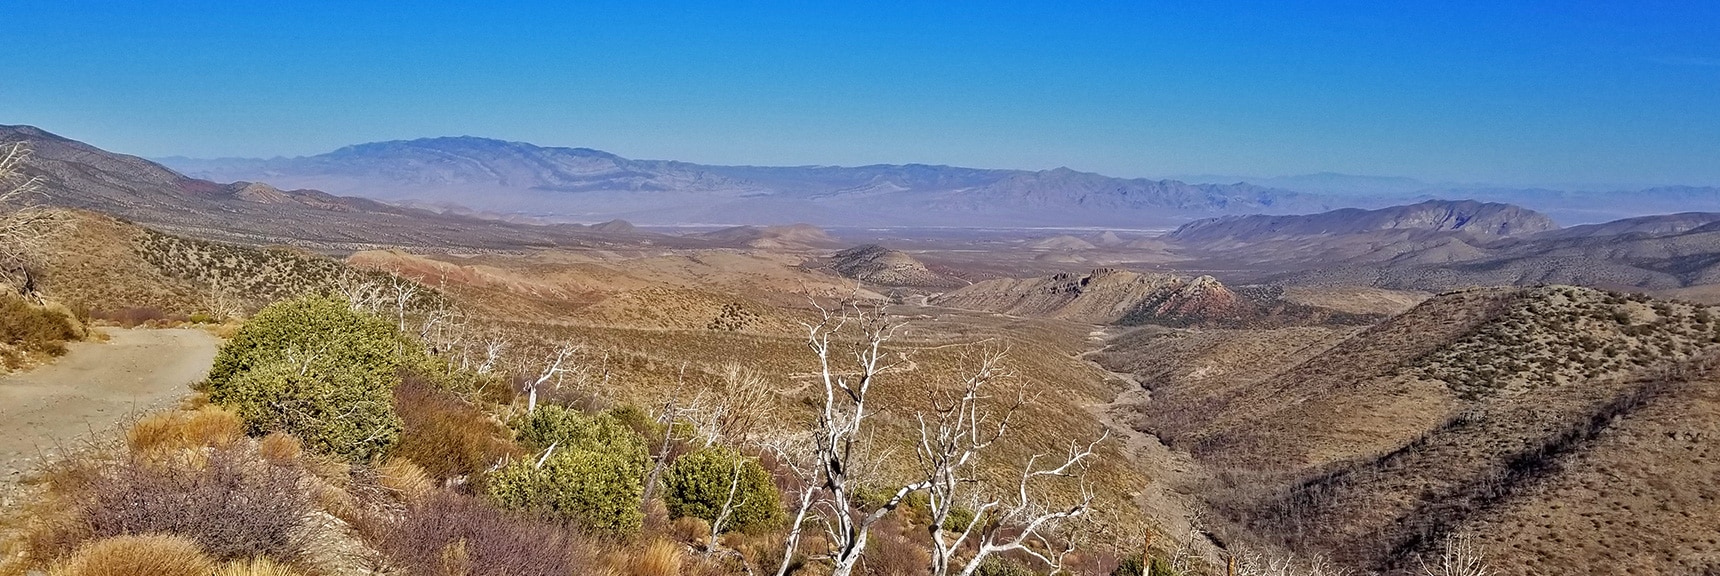 View Down Canyon Toward Sheep Range & Gass Peak from 7,000ft on Harris Mt. Rd.| Harris Springs Rd, Harris Mountain Rd | Spring Mountains Wilderness, Nevada